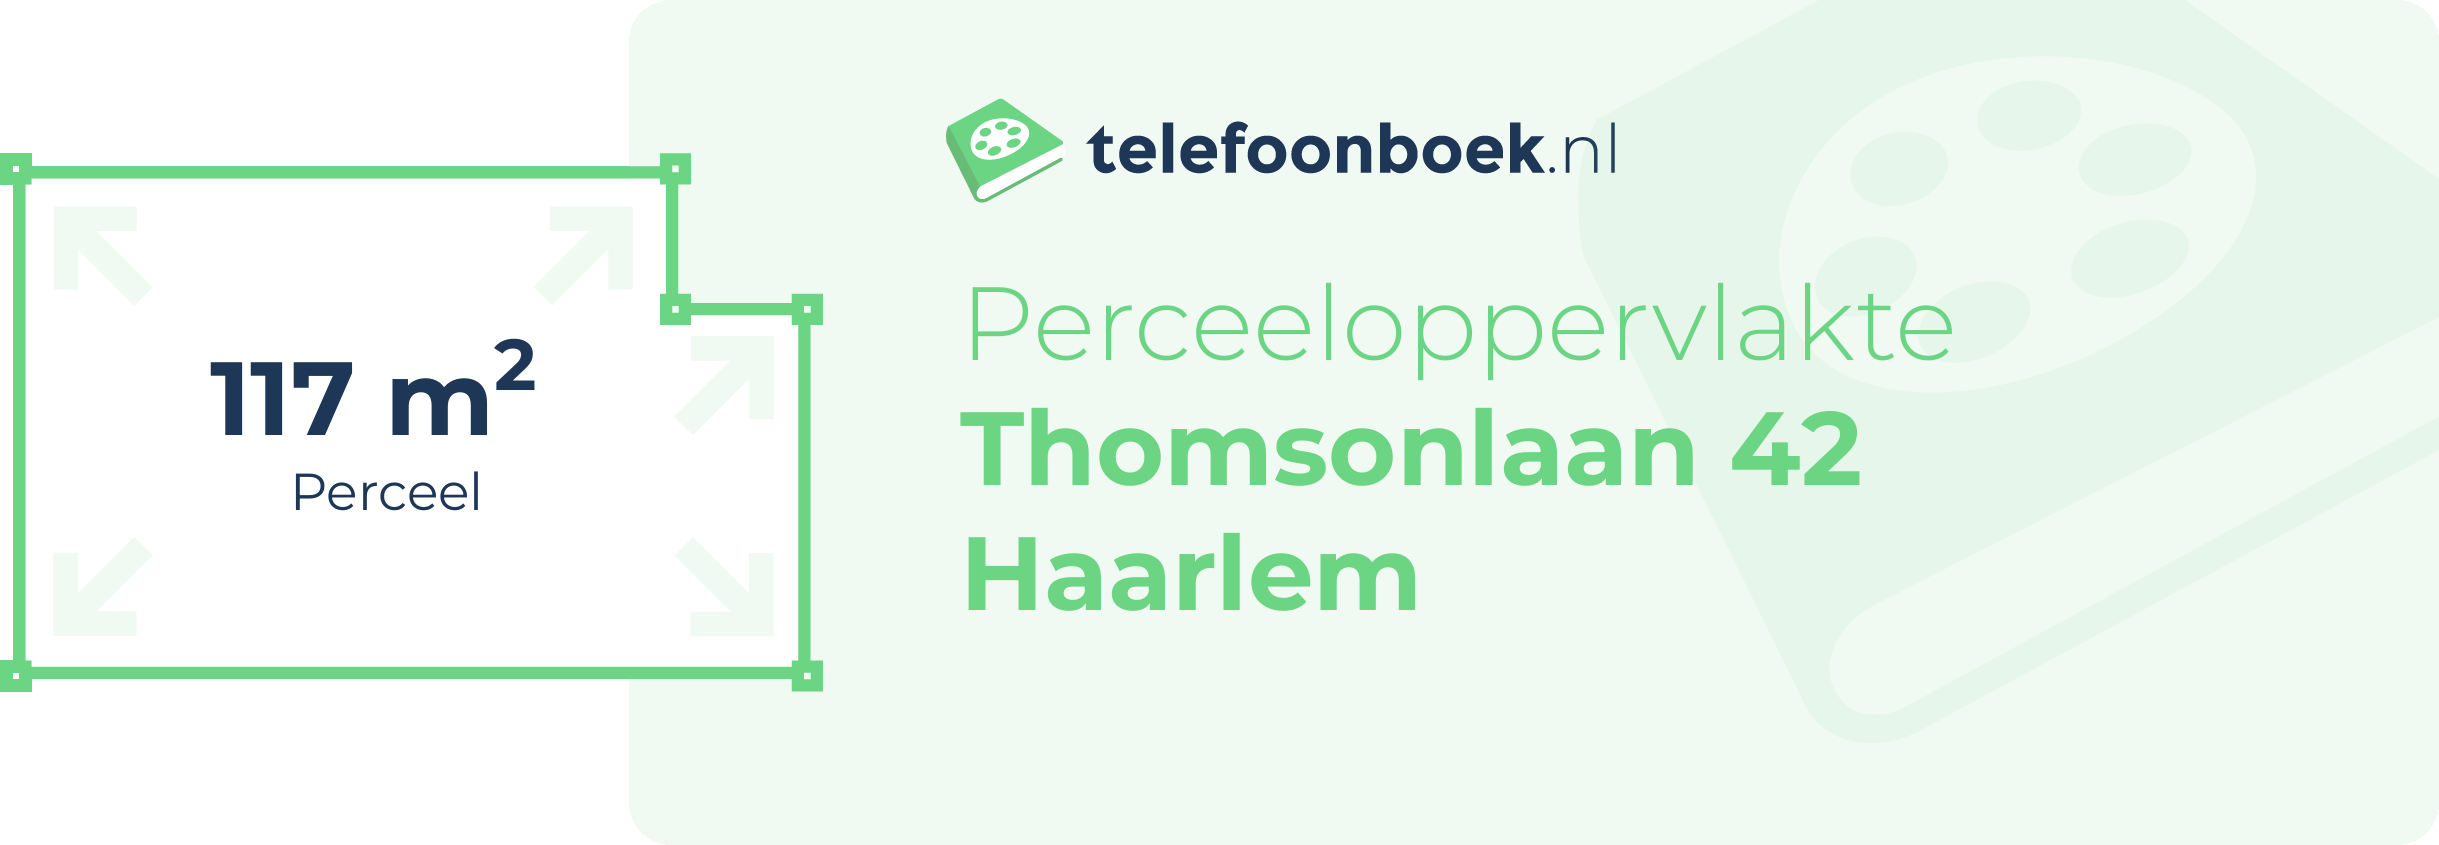 Perceeloppervlakte Thomsonlaan 42 Haarlem